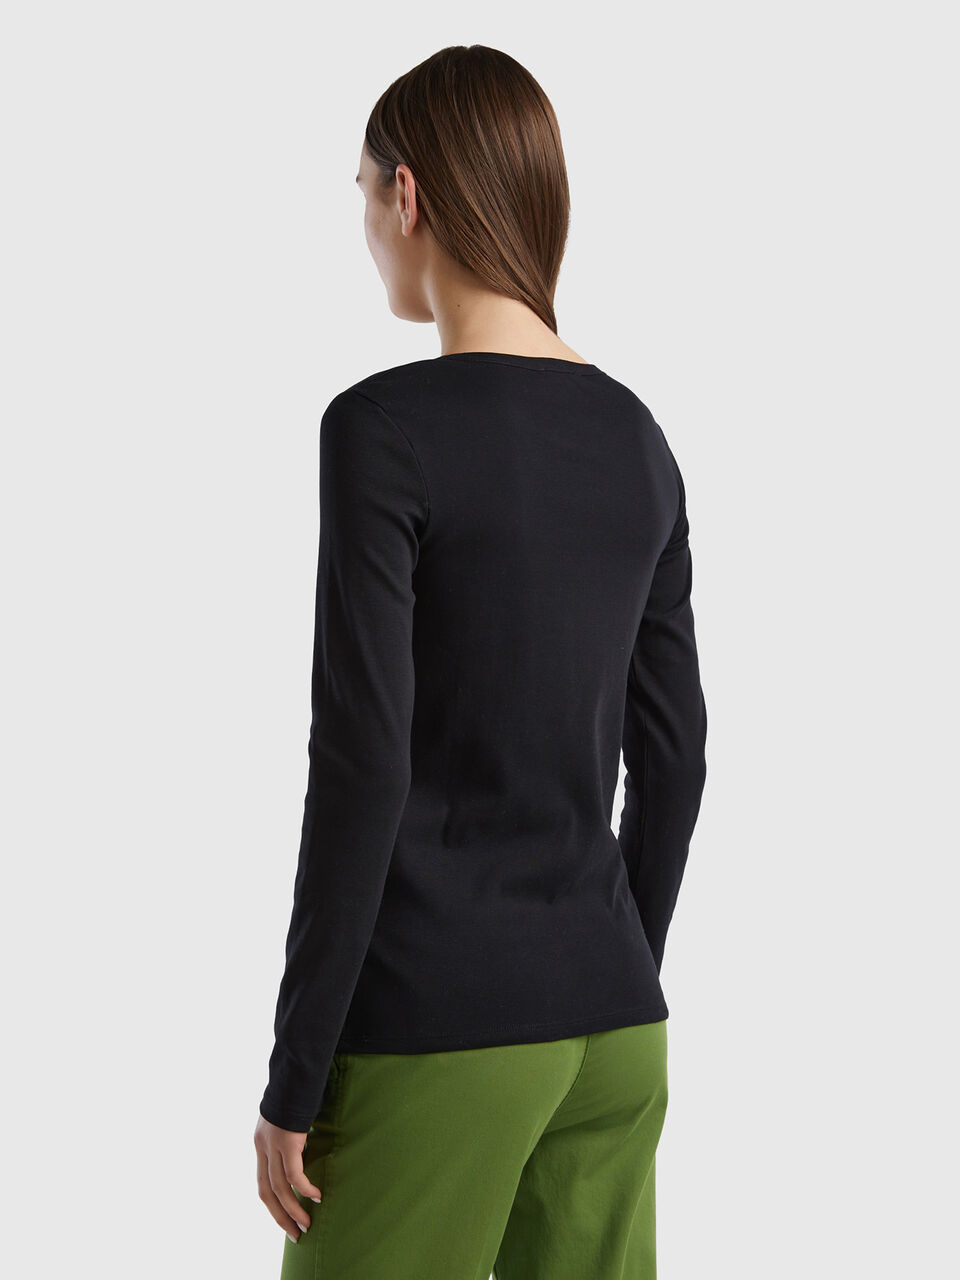 Black cotton | t-shirt 100% sleeve Black long - Benetton